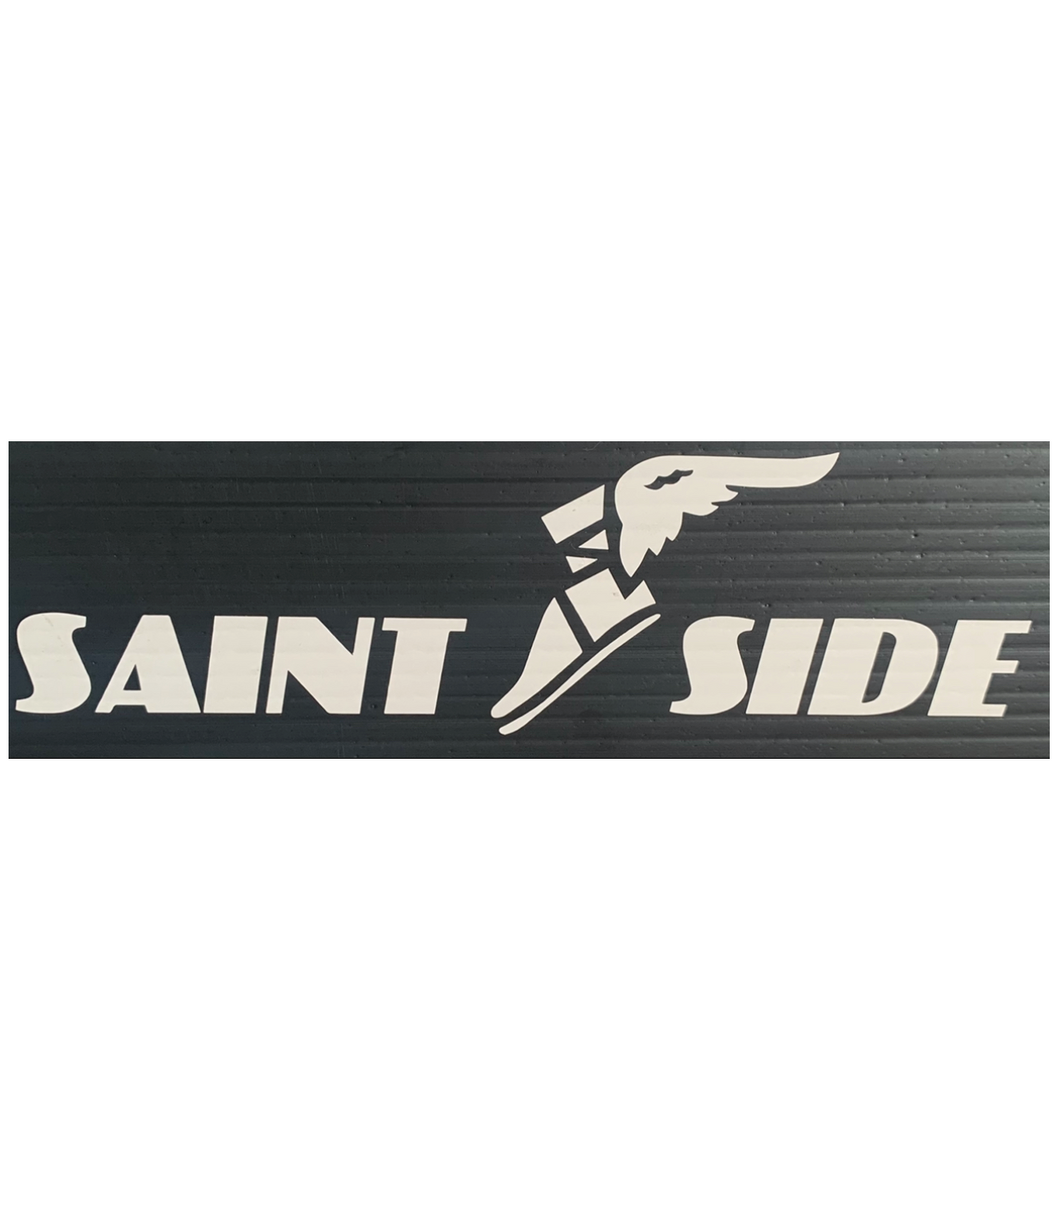 Saint Side - Good Yeah Vinyl Sticker